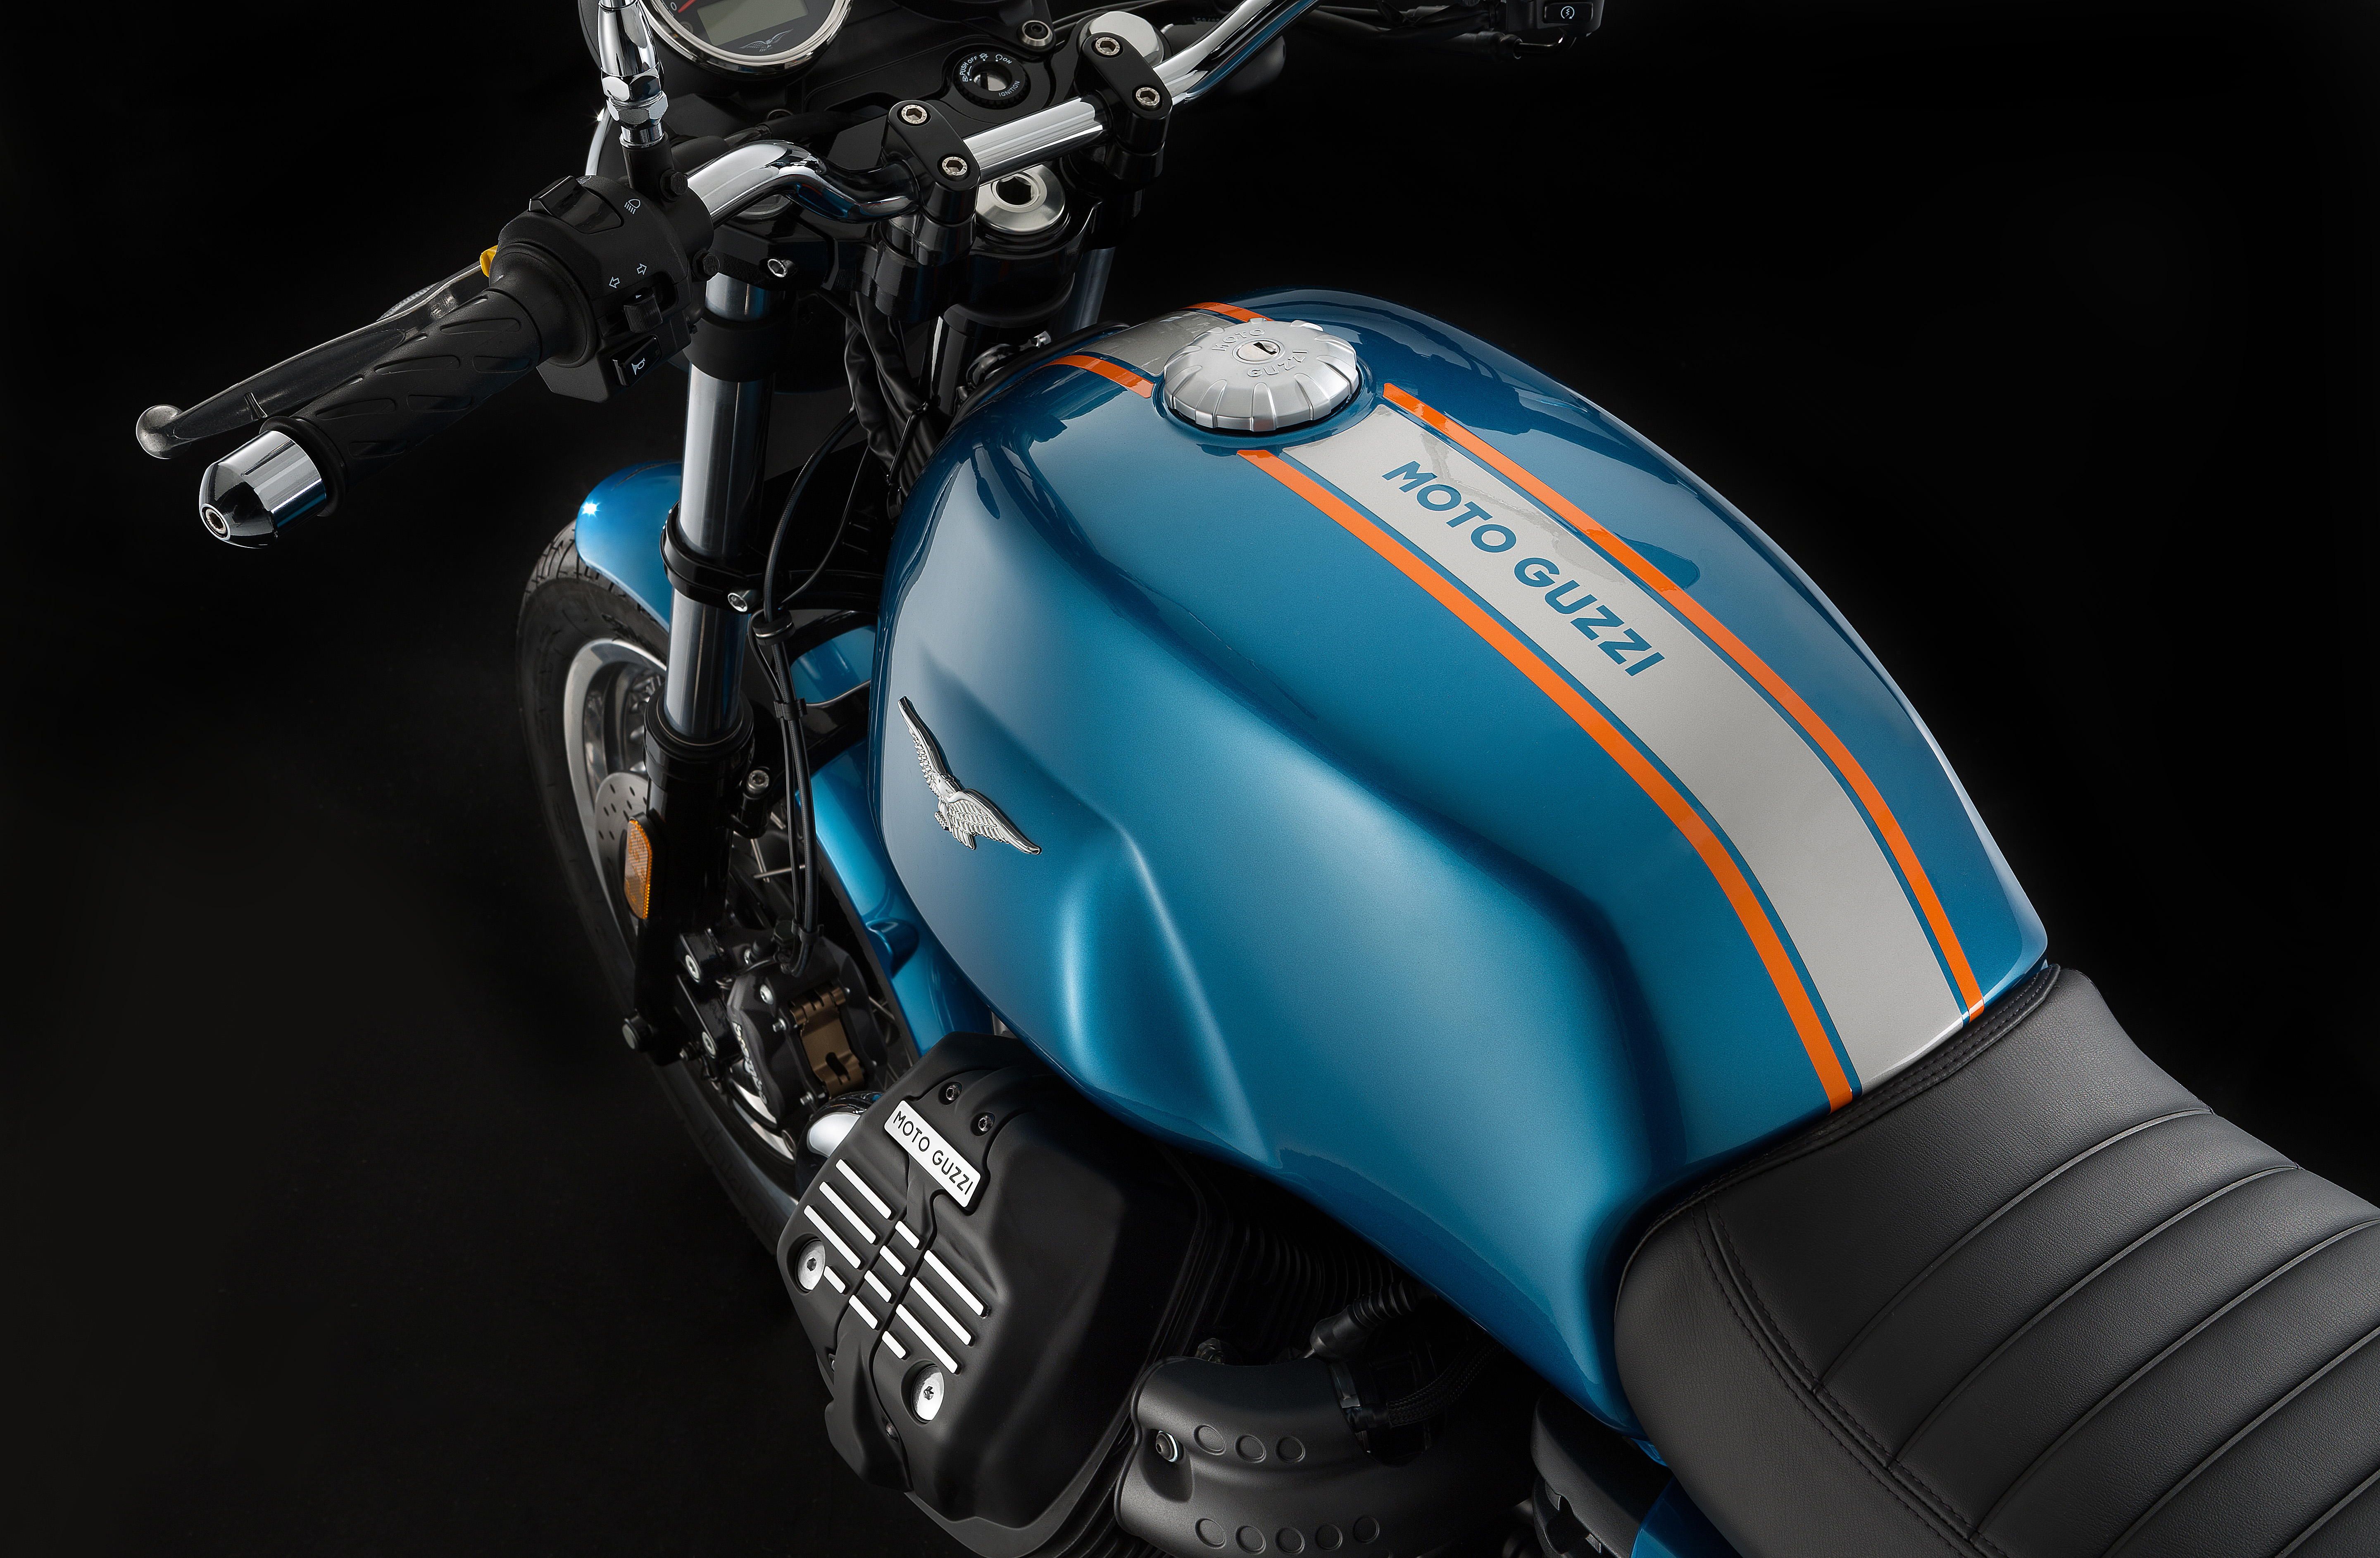 2017 - 2020 Moto Guzzi V7 III Special